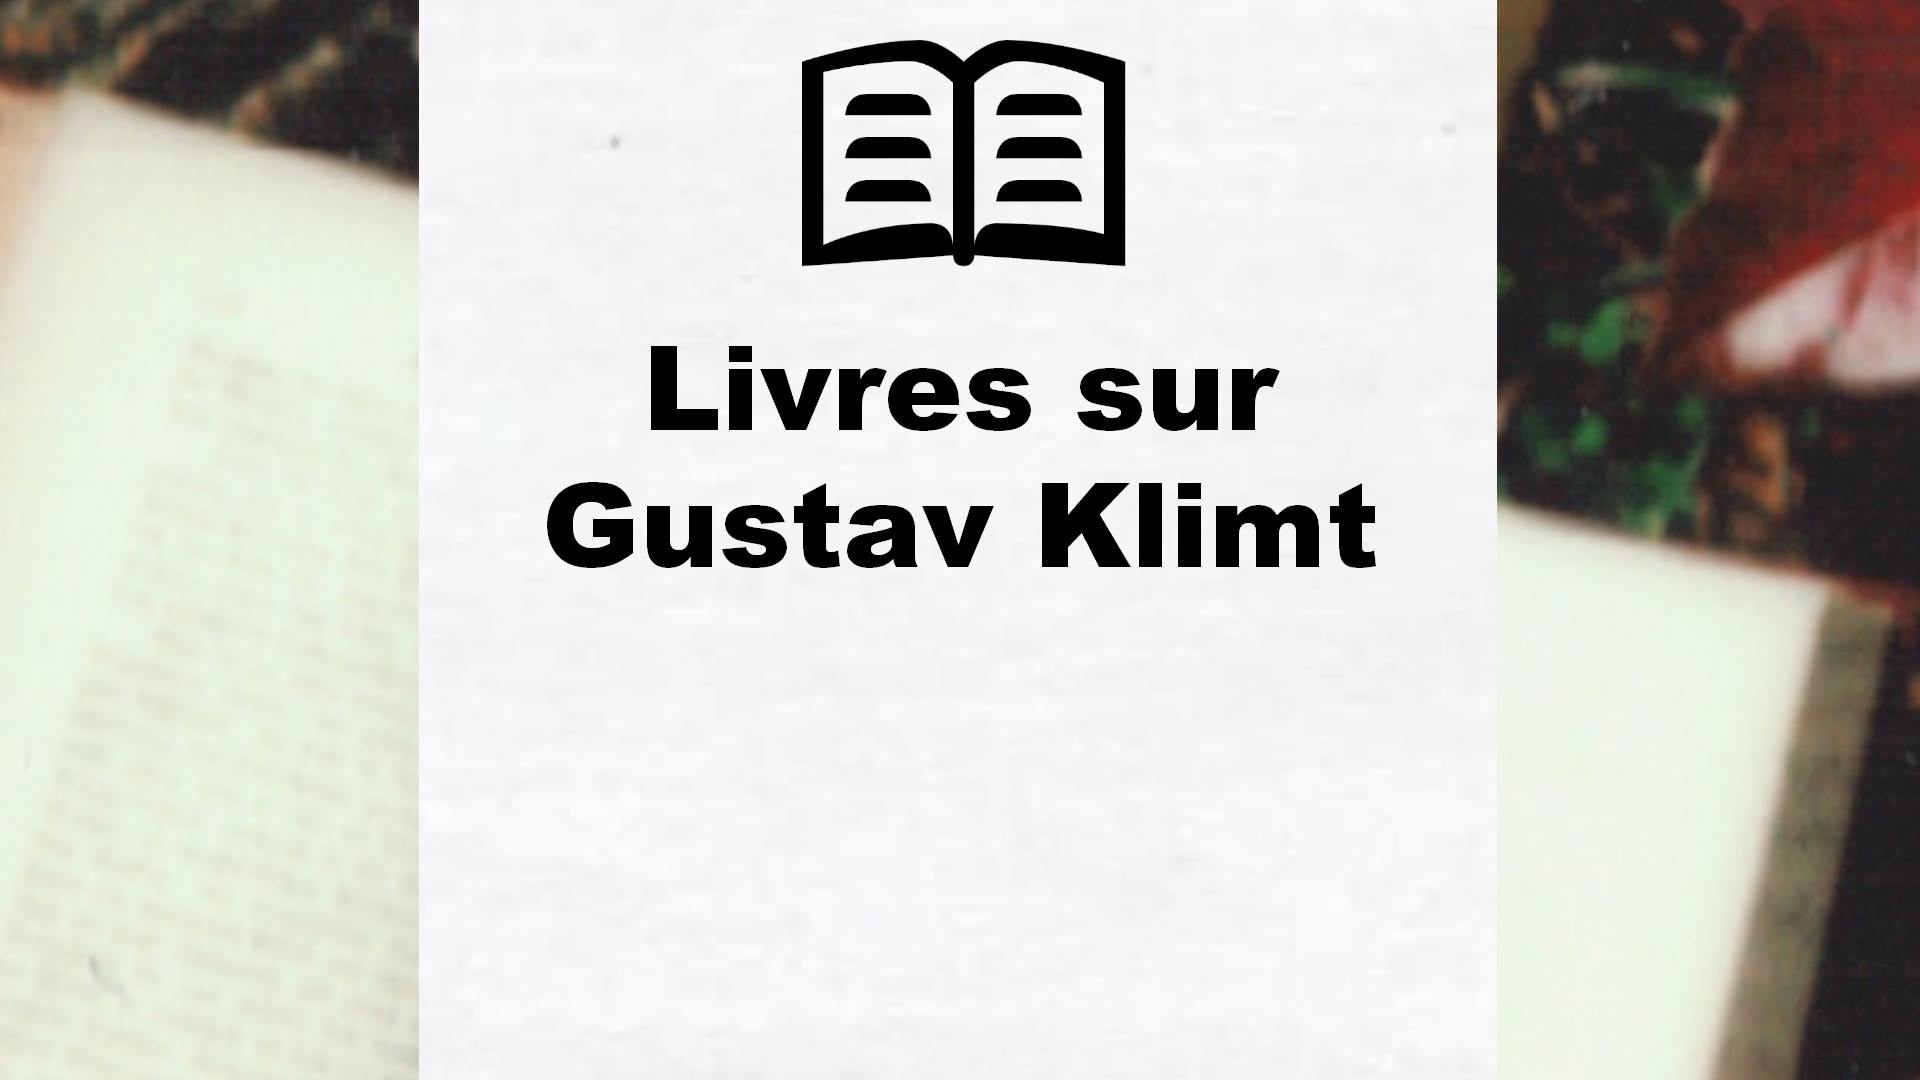 Livres sur Gustav Klimt